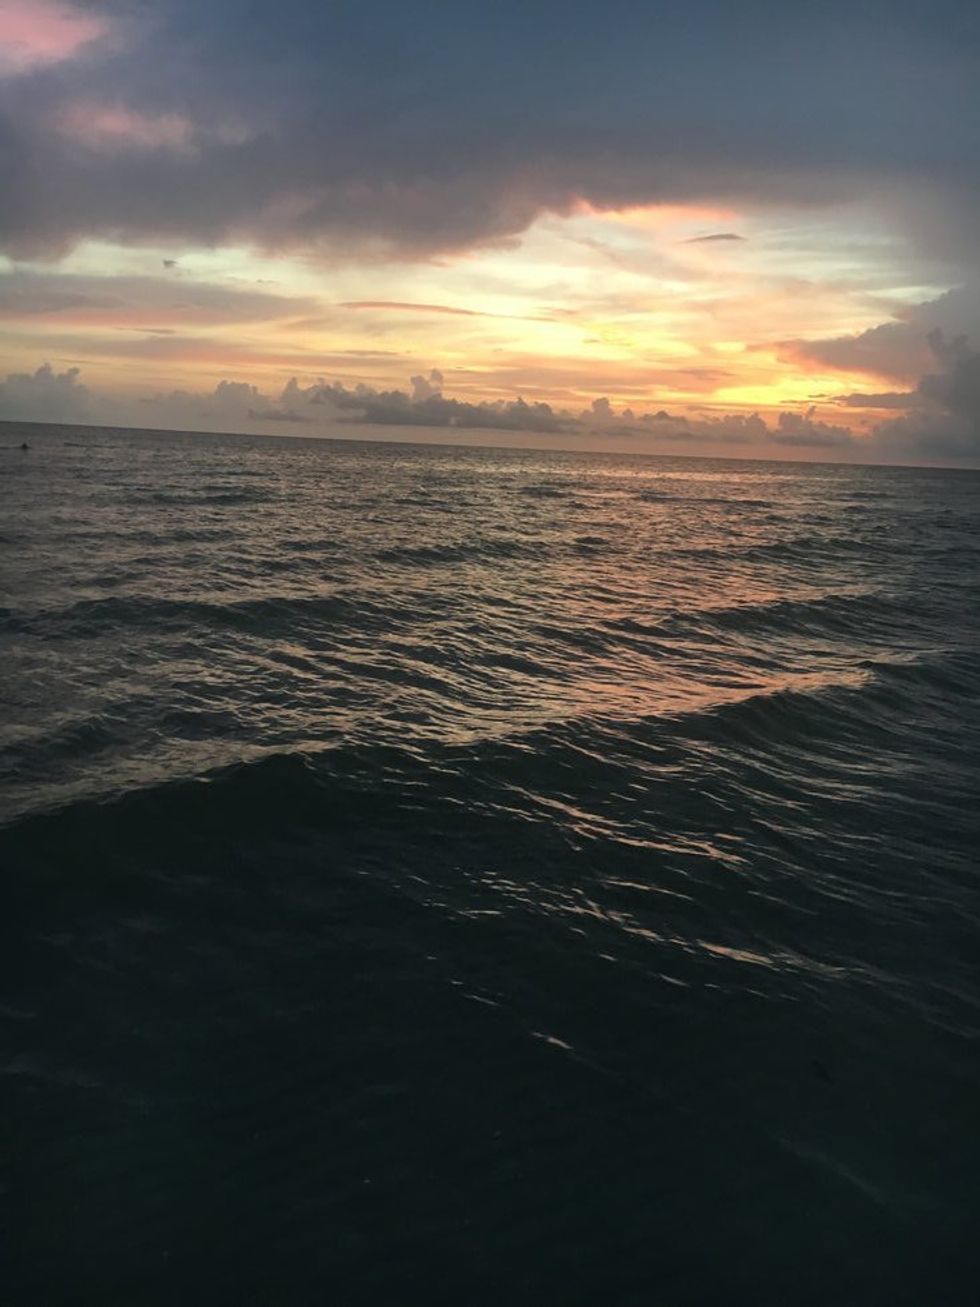 https://www.pexels.com/photo/beach-woman-sunrise-silhouette-40192/